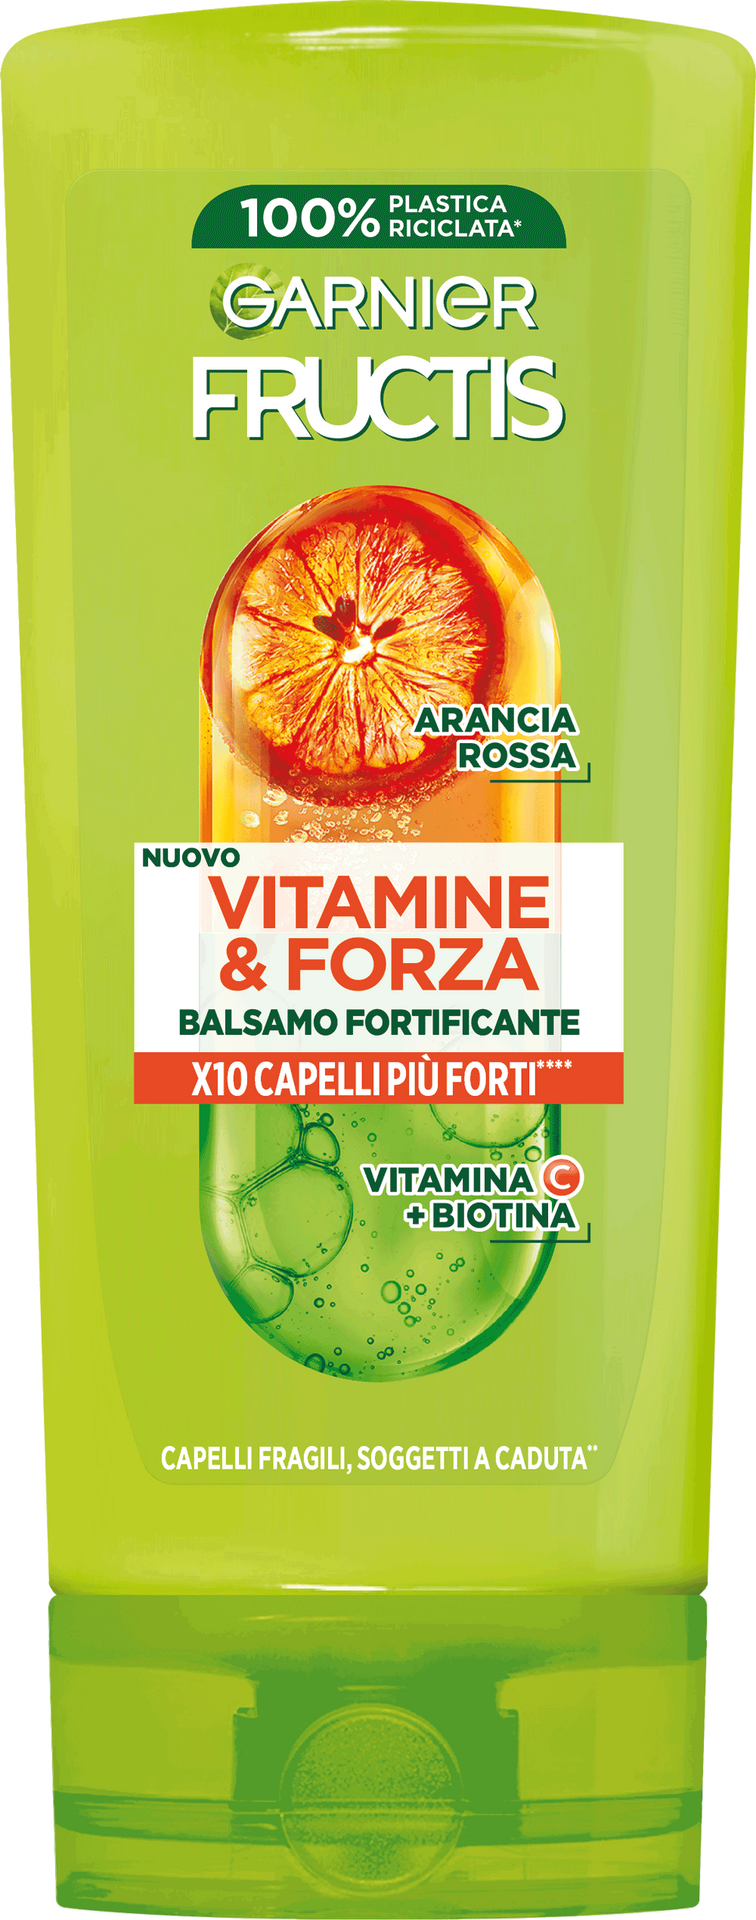 Balsamo Fortificante Garnier Fructis Vitamine & Forza Anticaduta e Antirottura